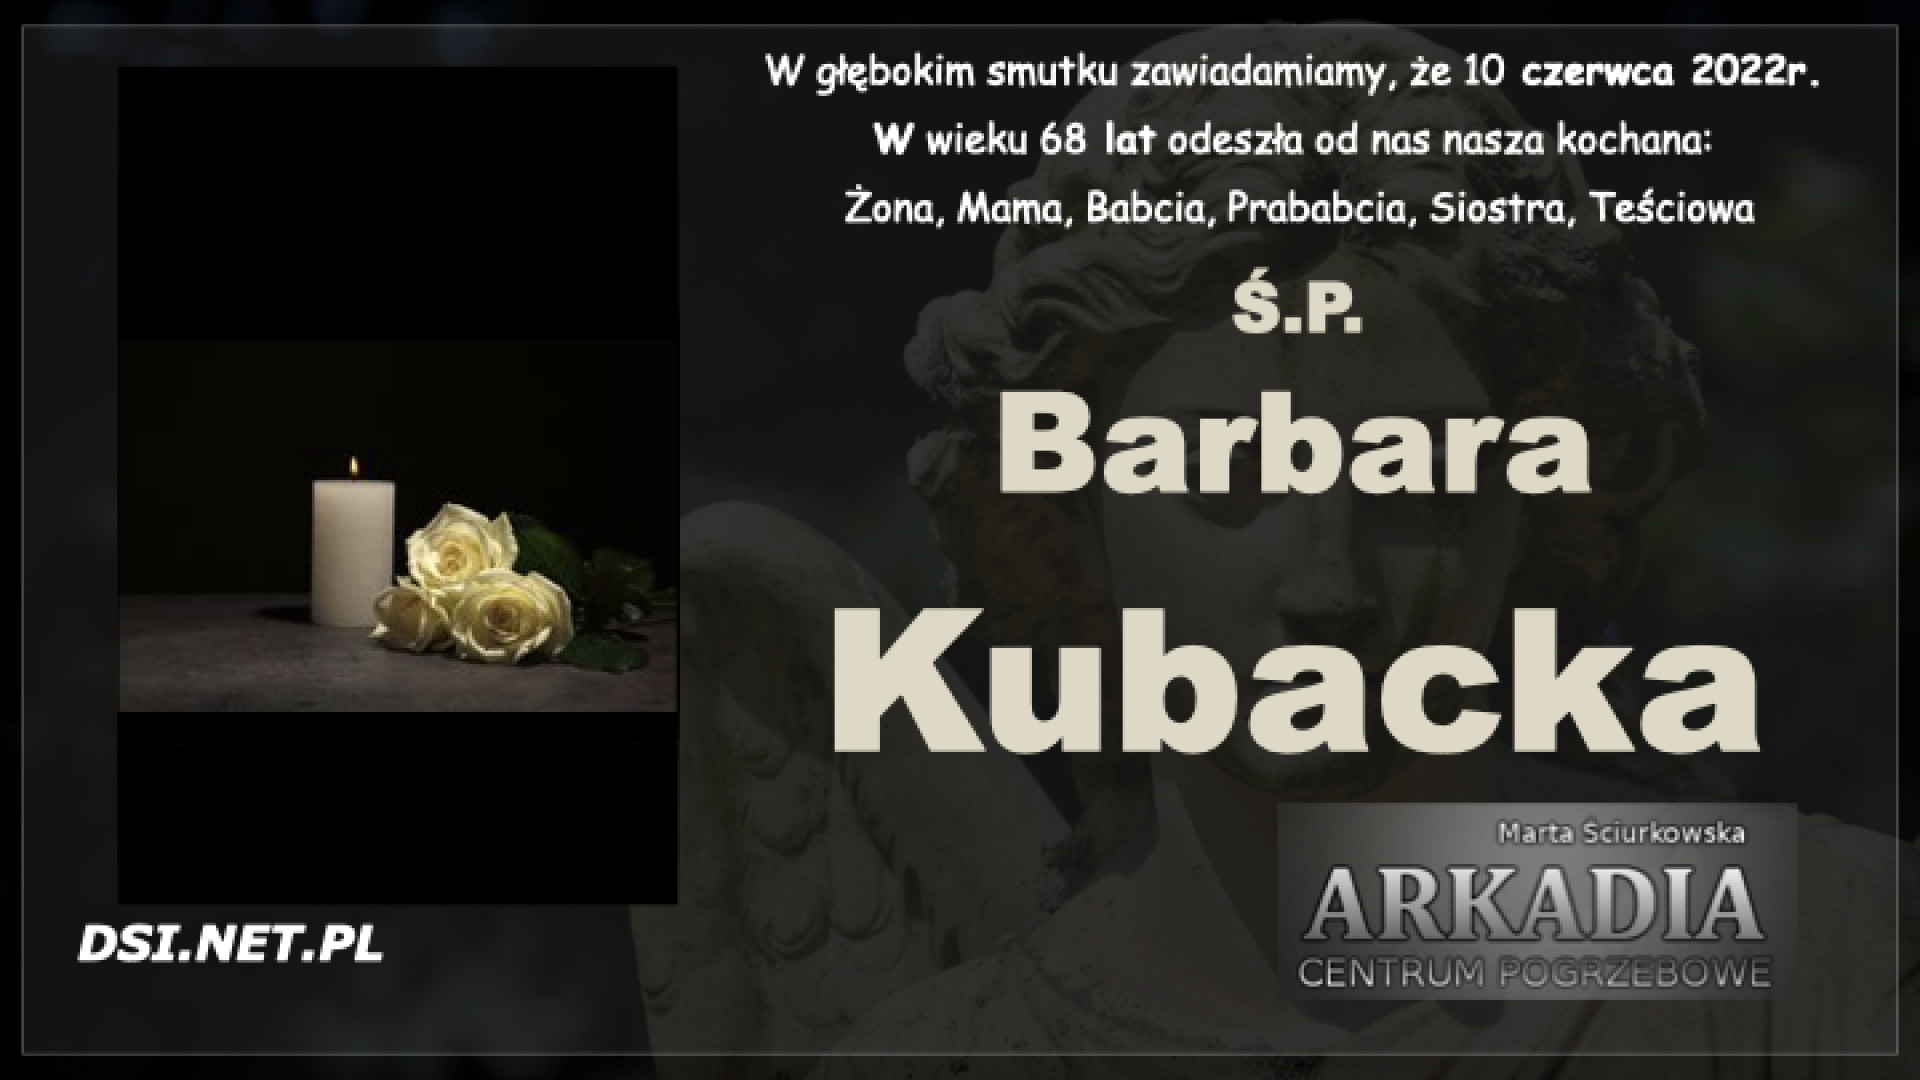 Ś.P. Barbara Kubacka